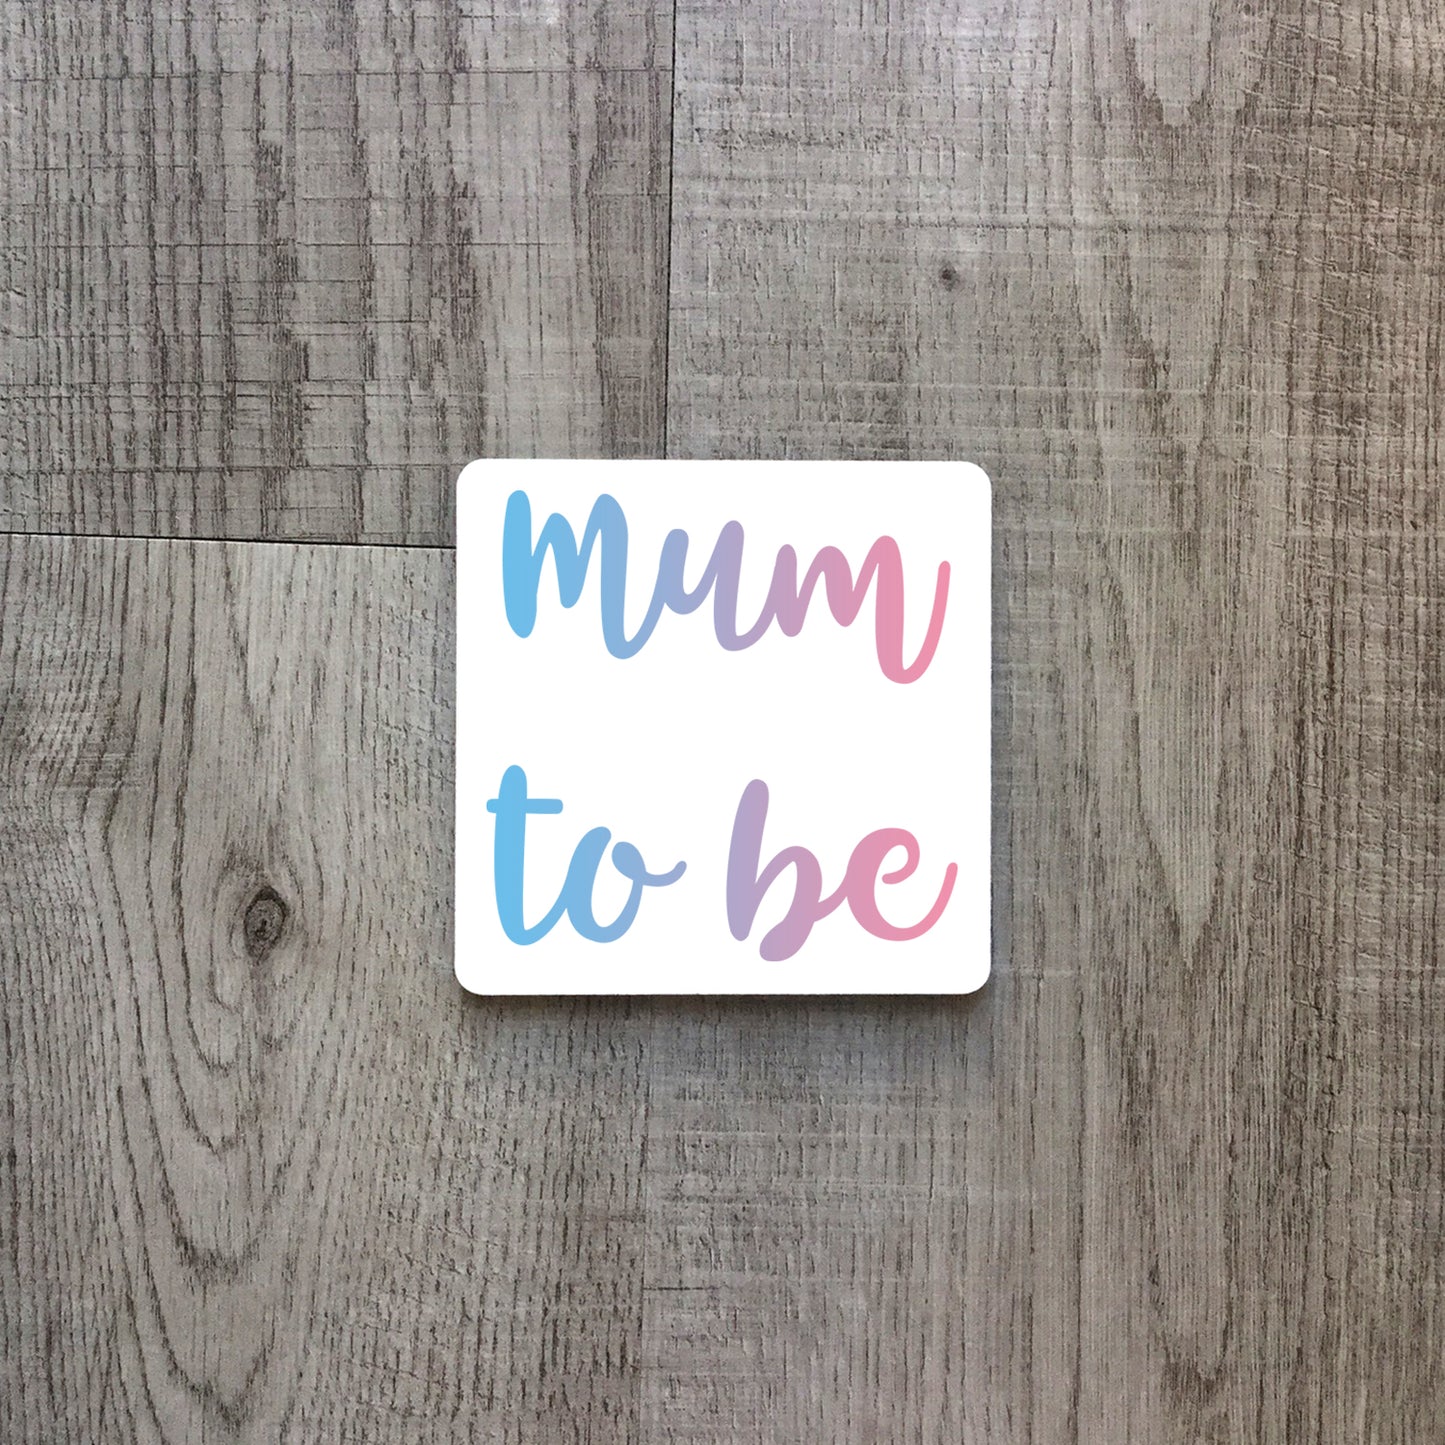 Mum to be | Ceramic mug - Adnil Creations